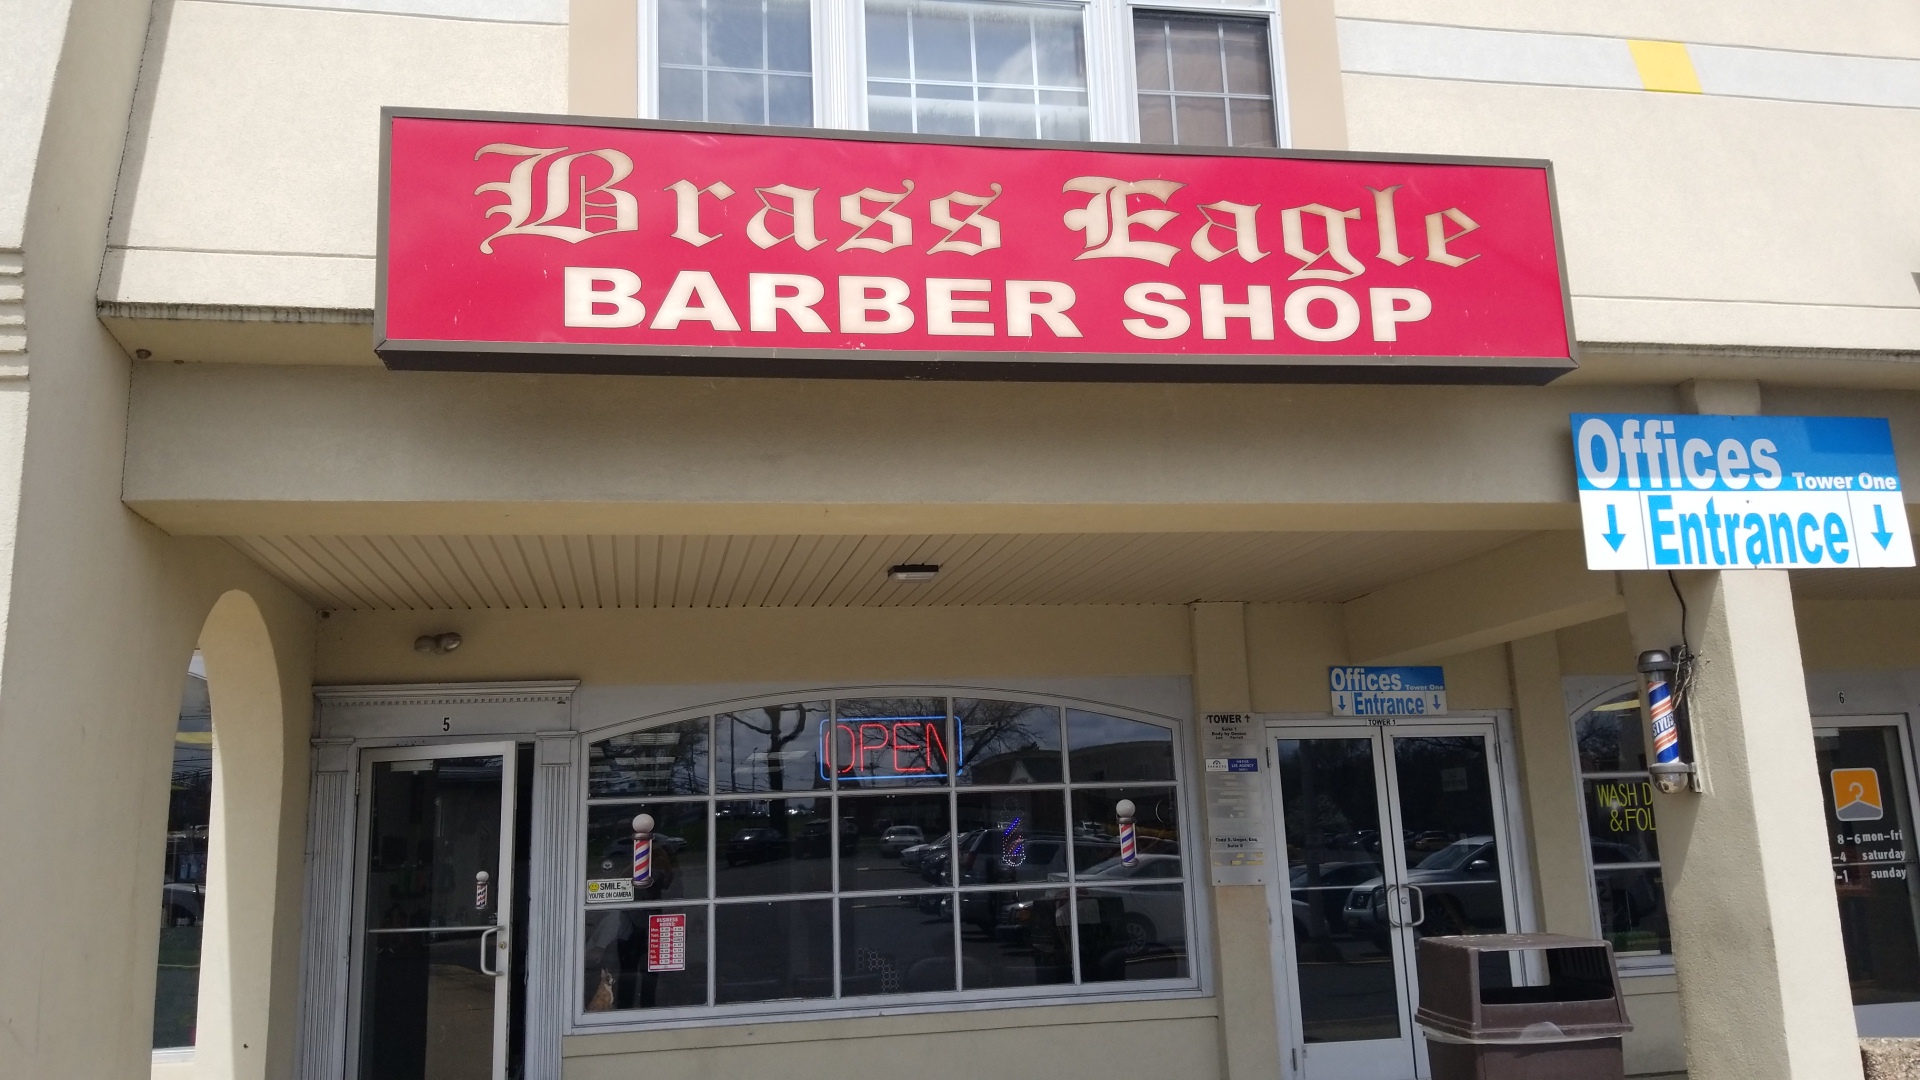 Brass Eagle Barbershop